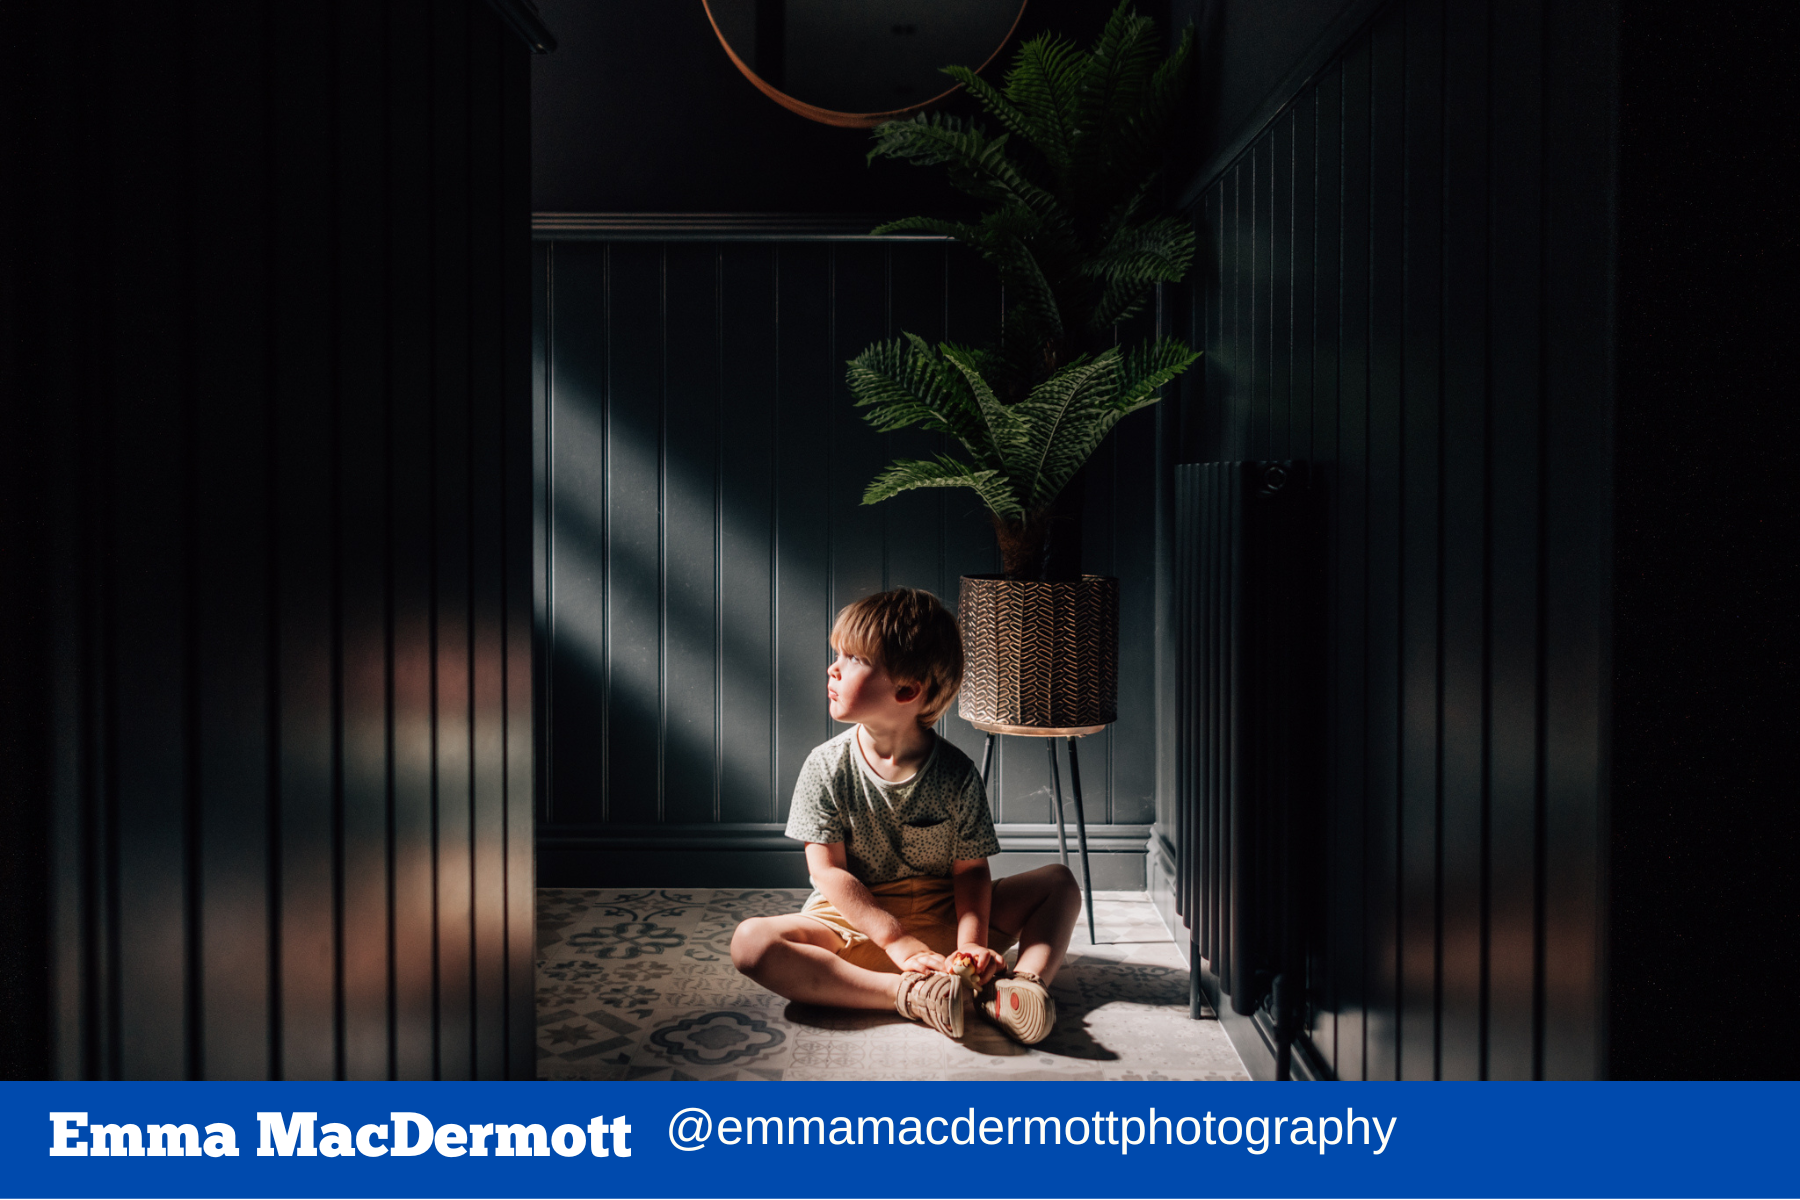 August VIP Photo Contest Winners - Emma MacDermott